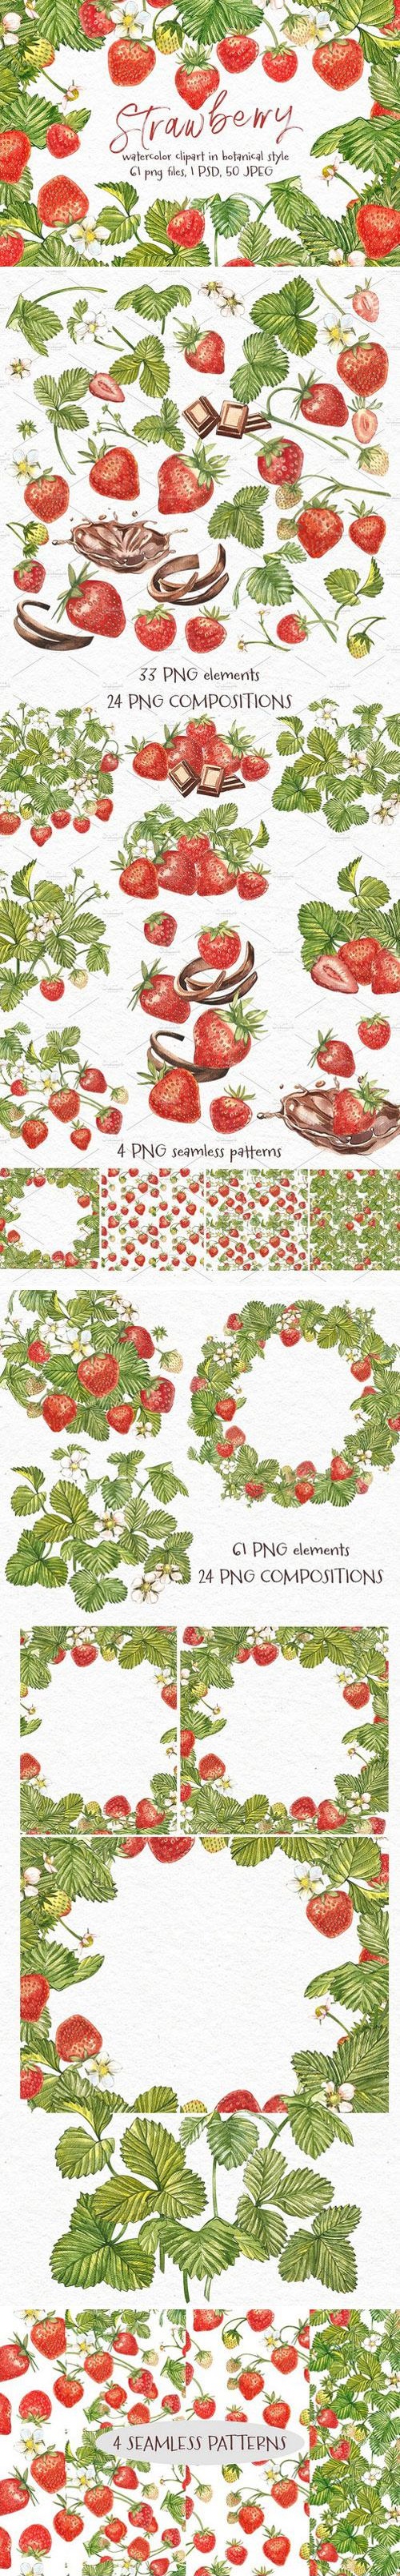 Strawberry illustrations 2078355